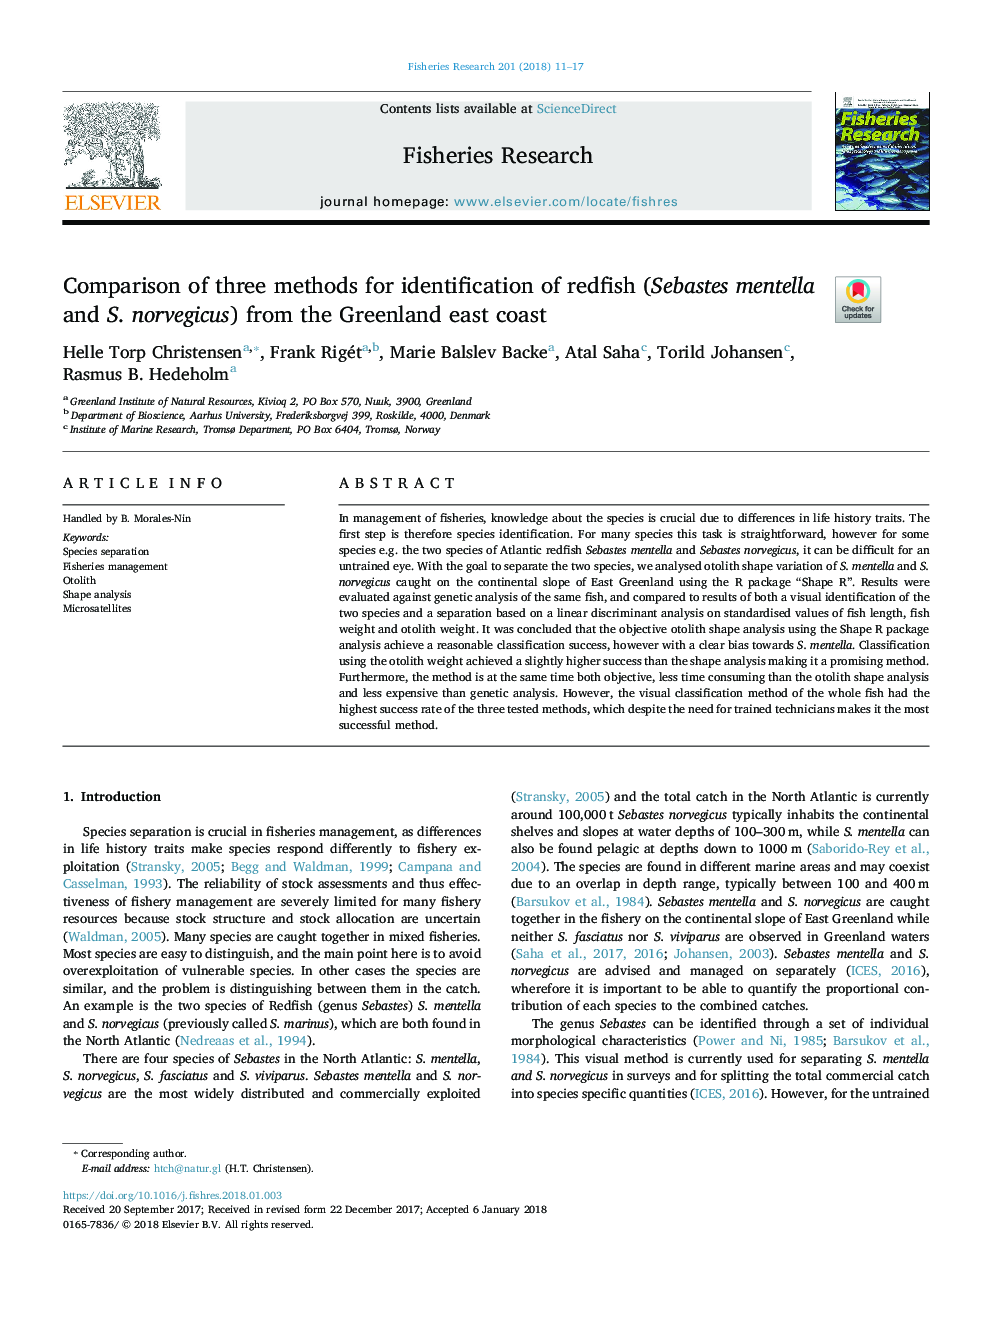 Comparison of three methods for identification of redfish (Sebastes mentella and S. norvegicus) from the Greenland east coast